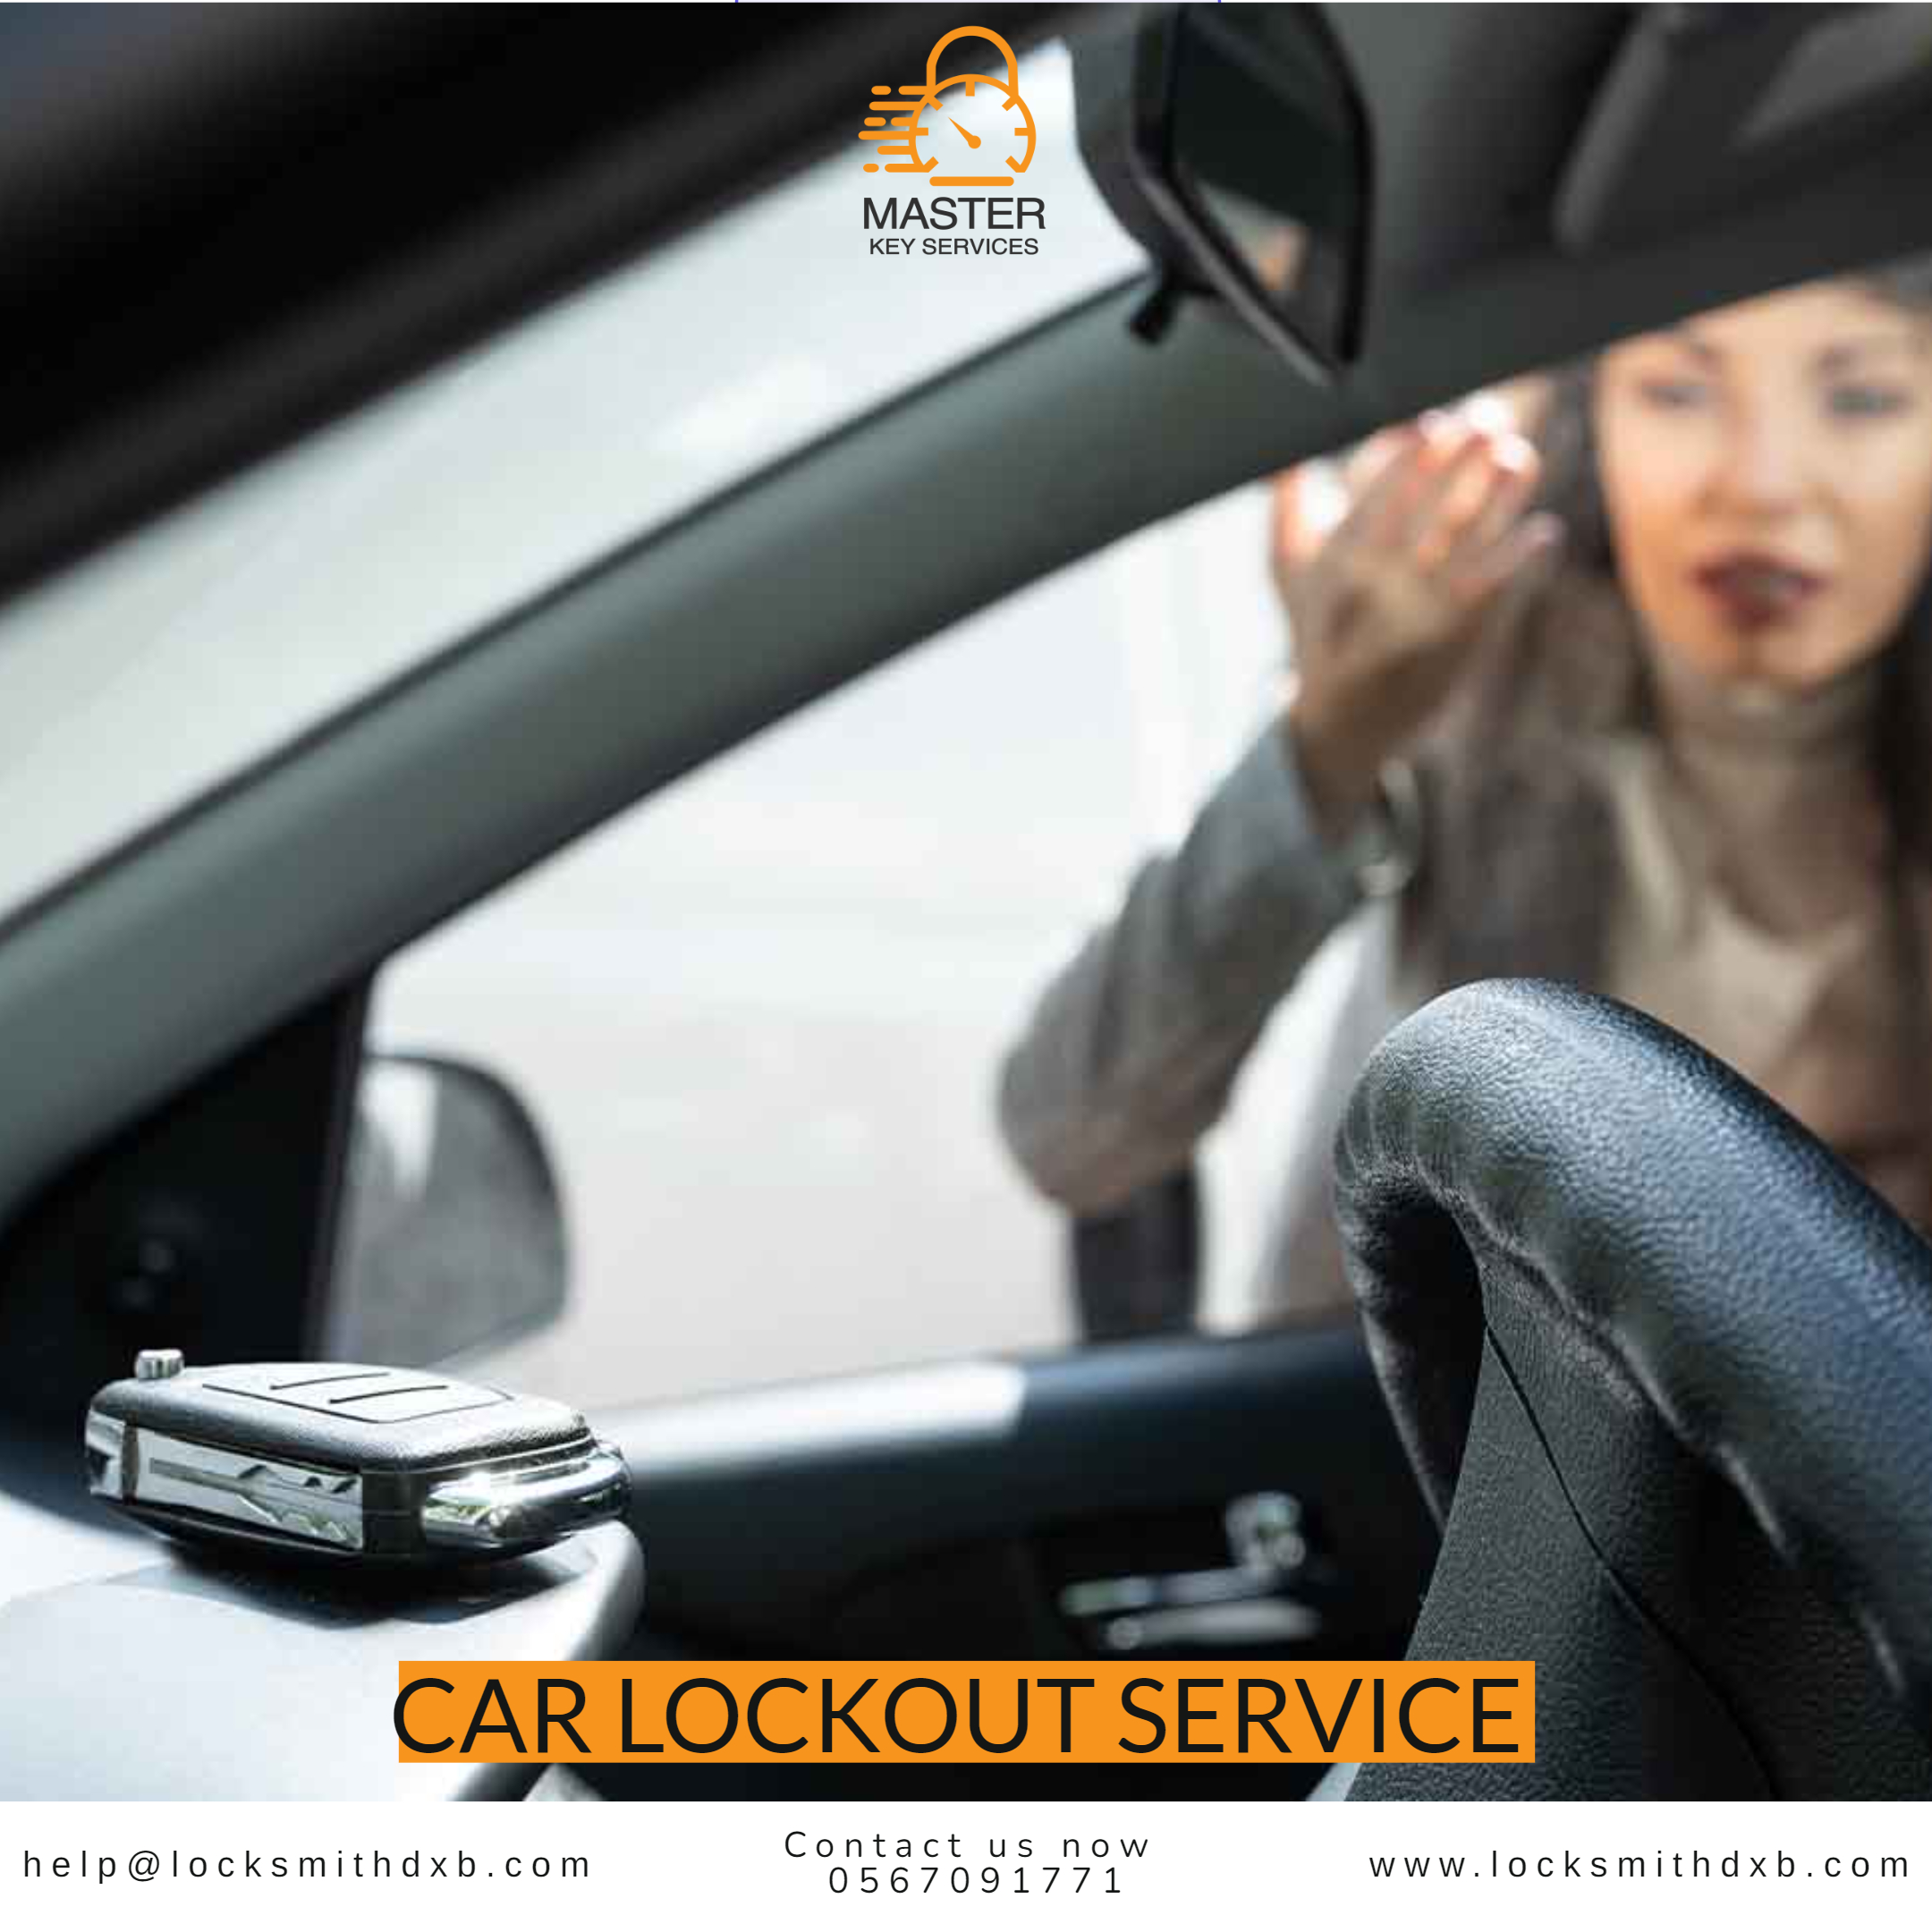 Car lockout service